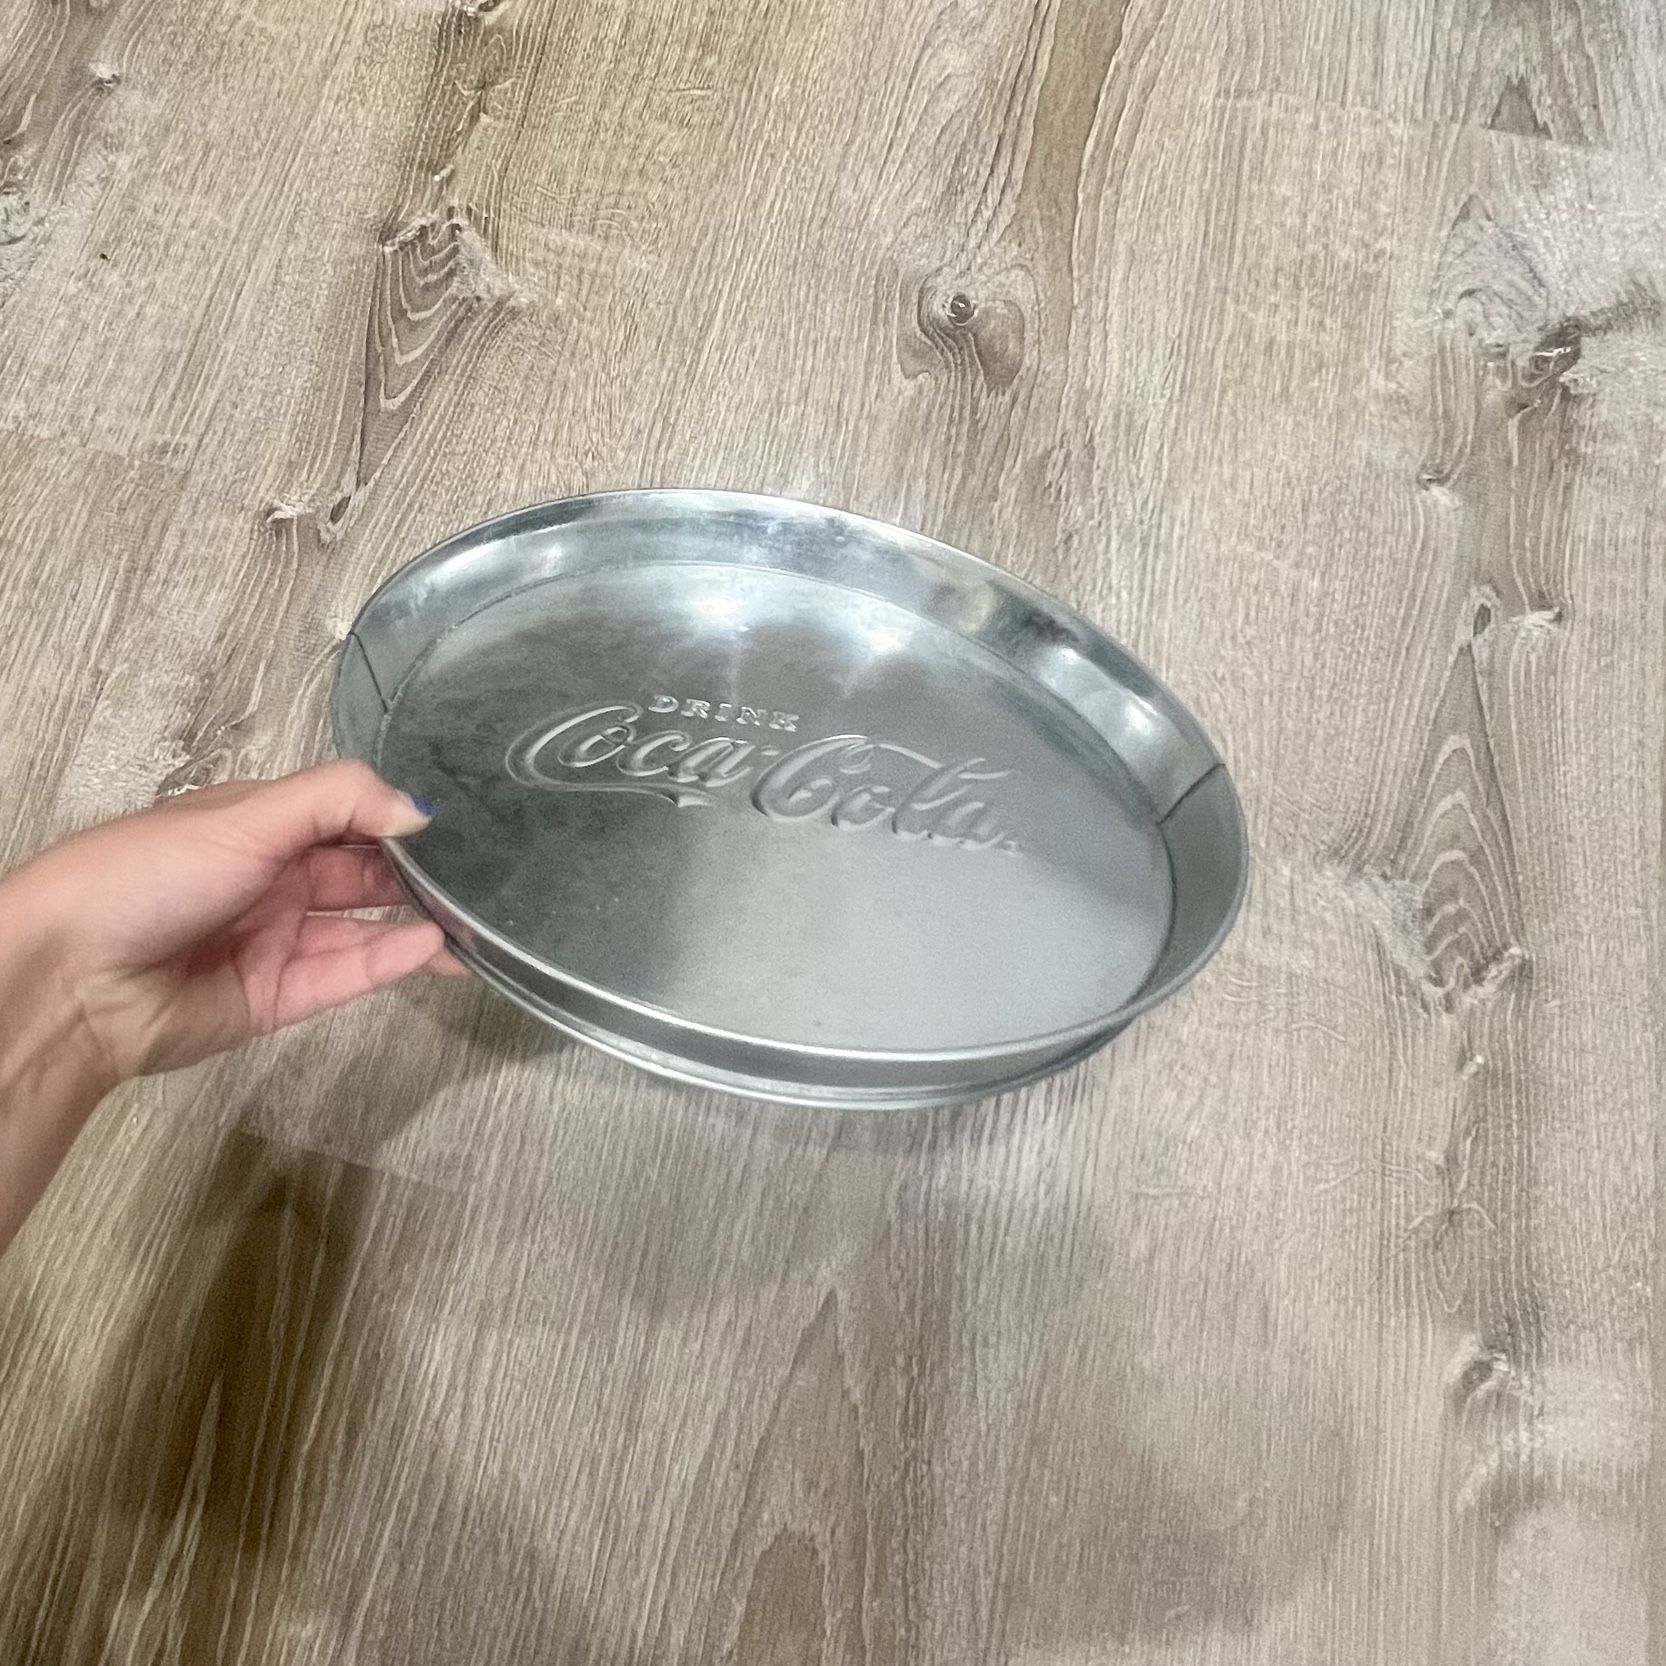 Coca-Cola Galvanized Tin Serving Tray